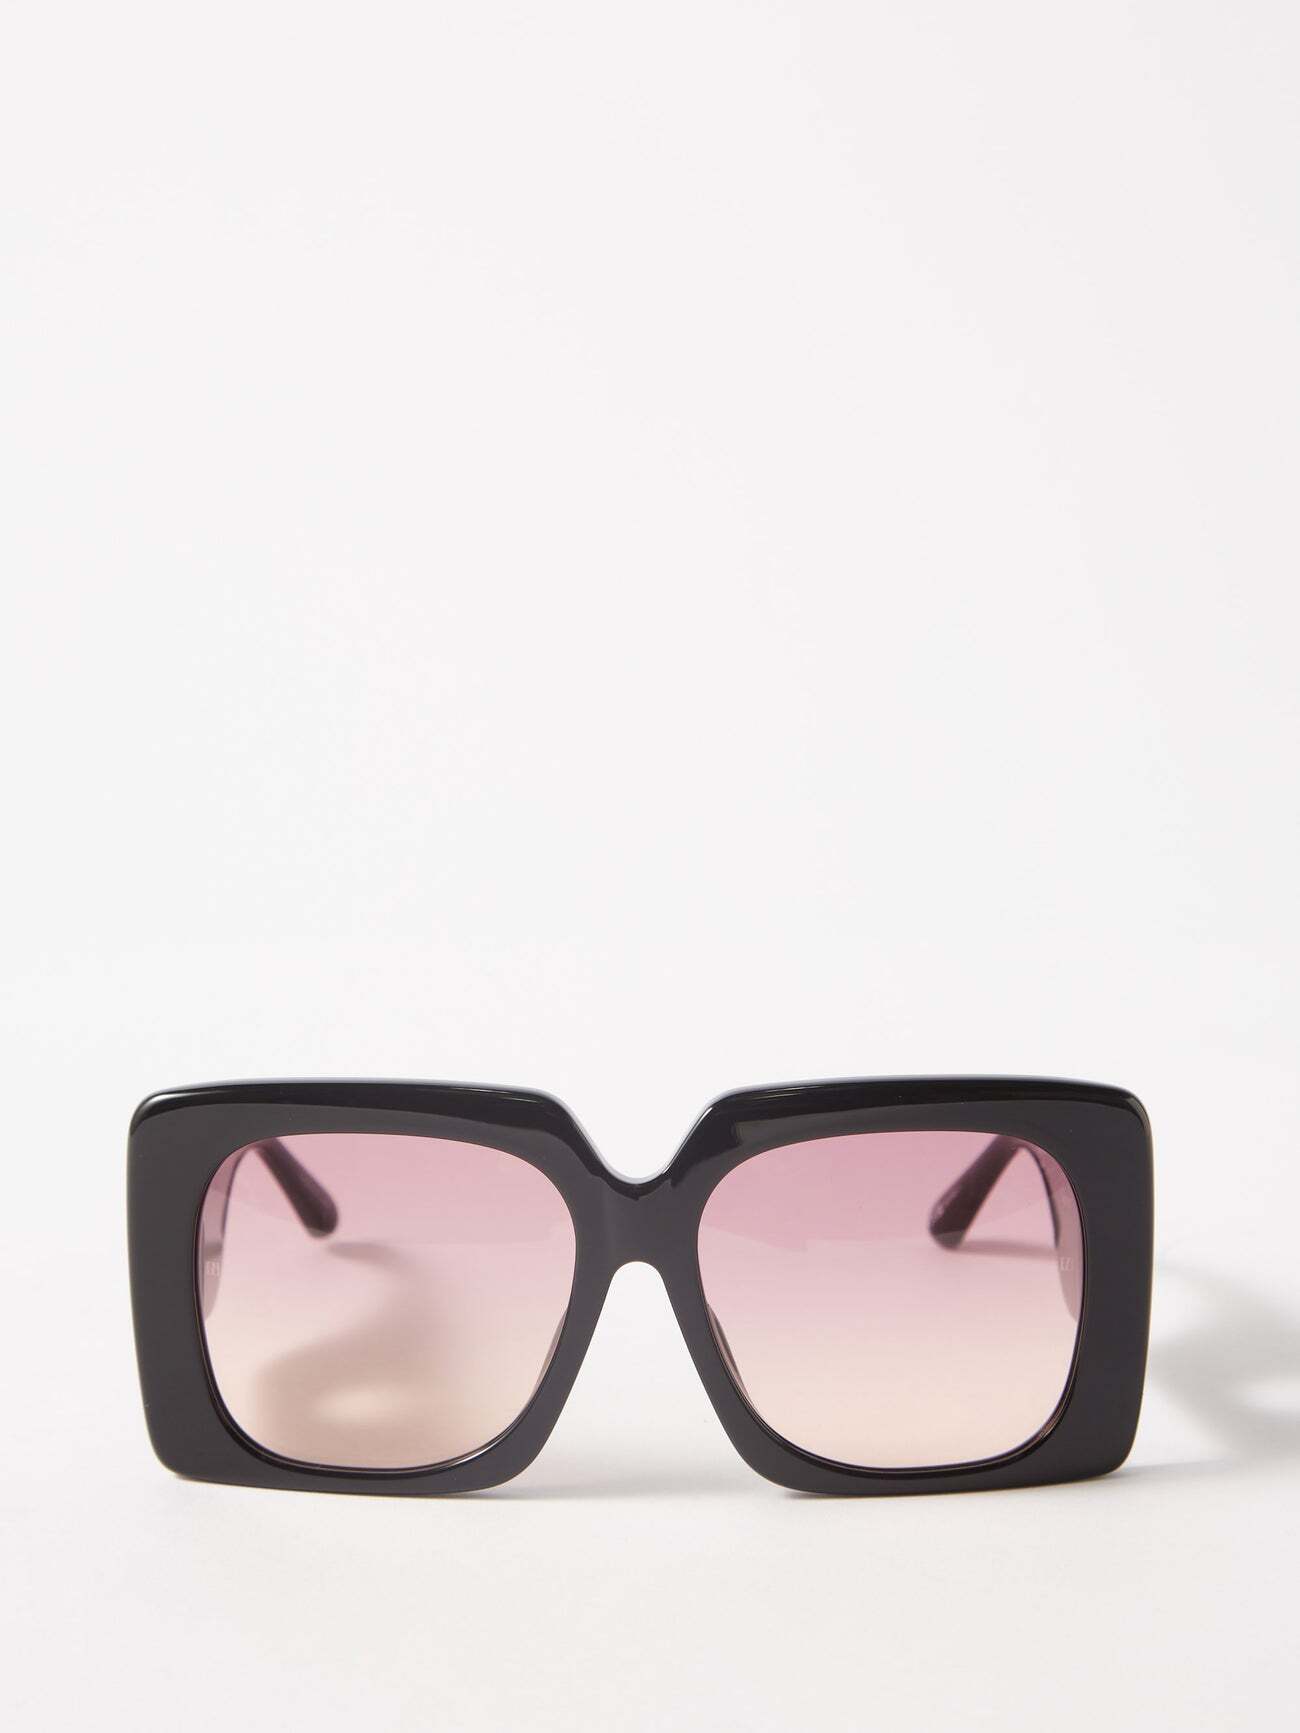 Linda Farrow - Sierra Oversized Square Acetate Sunglasses - Womens - Black